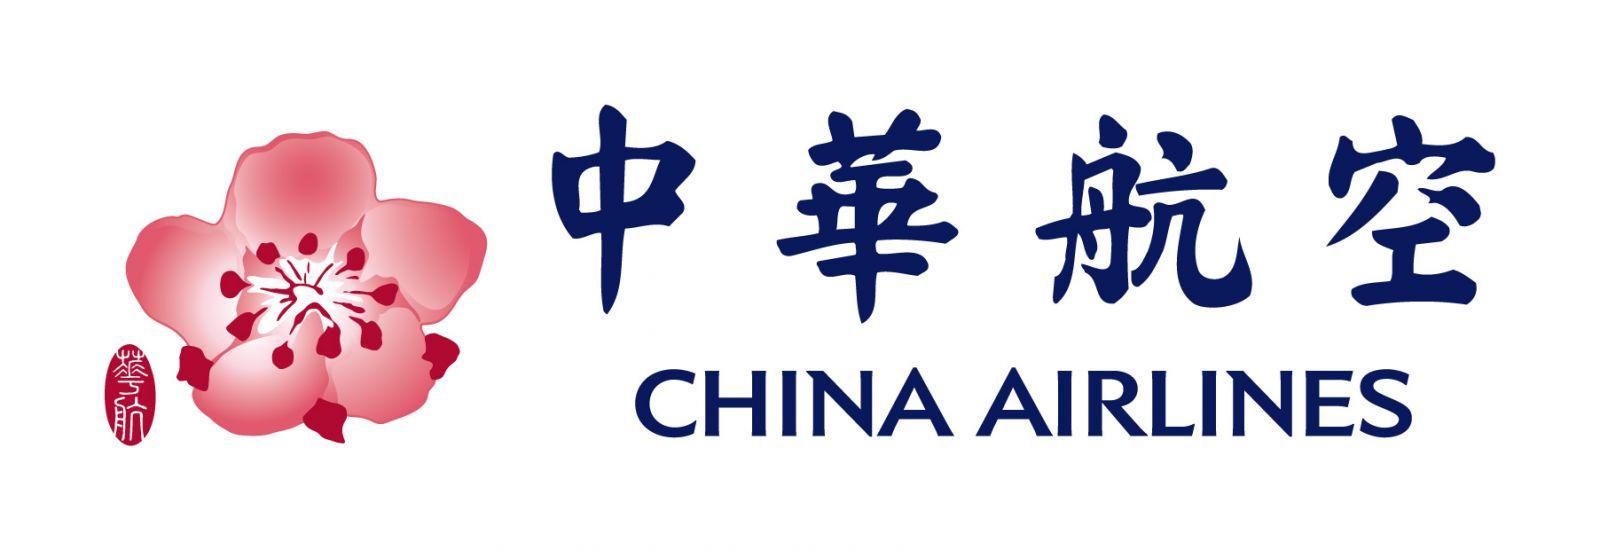 China Airlines Logo - China airlines Logos